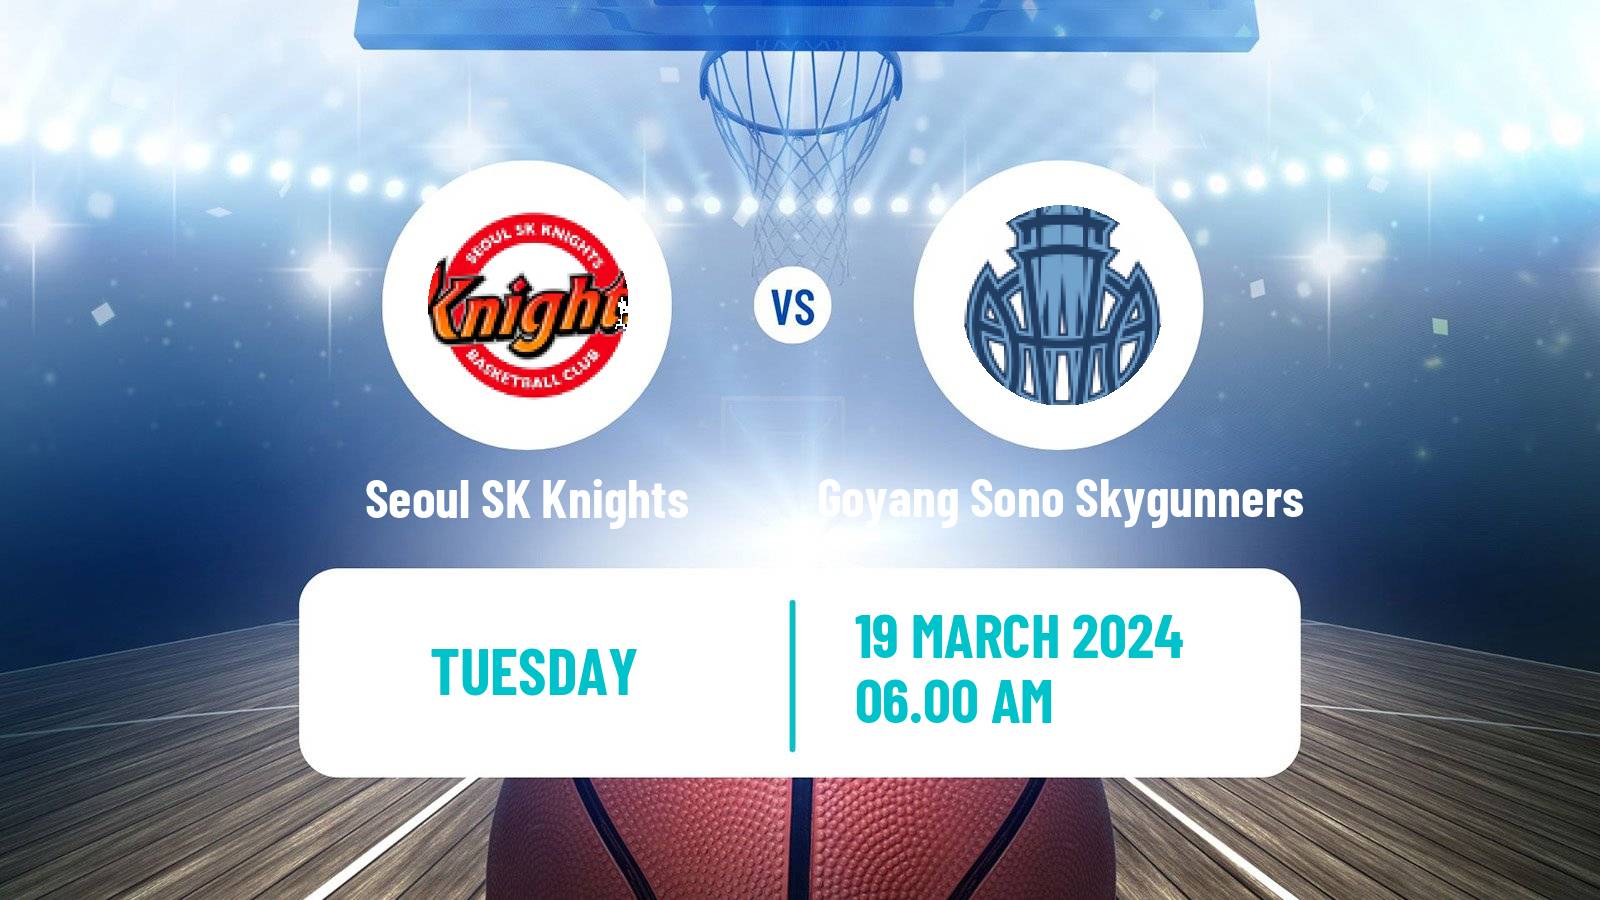 Basketball KBL Seoul SK Knights - Goyang Sono Skygunners